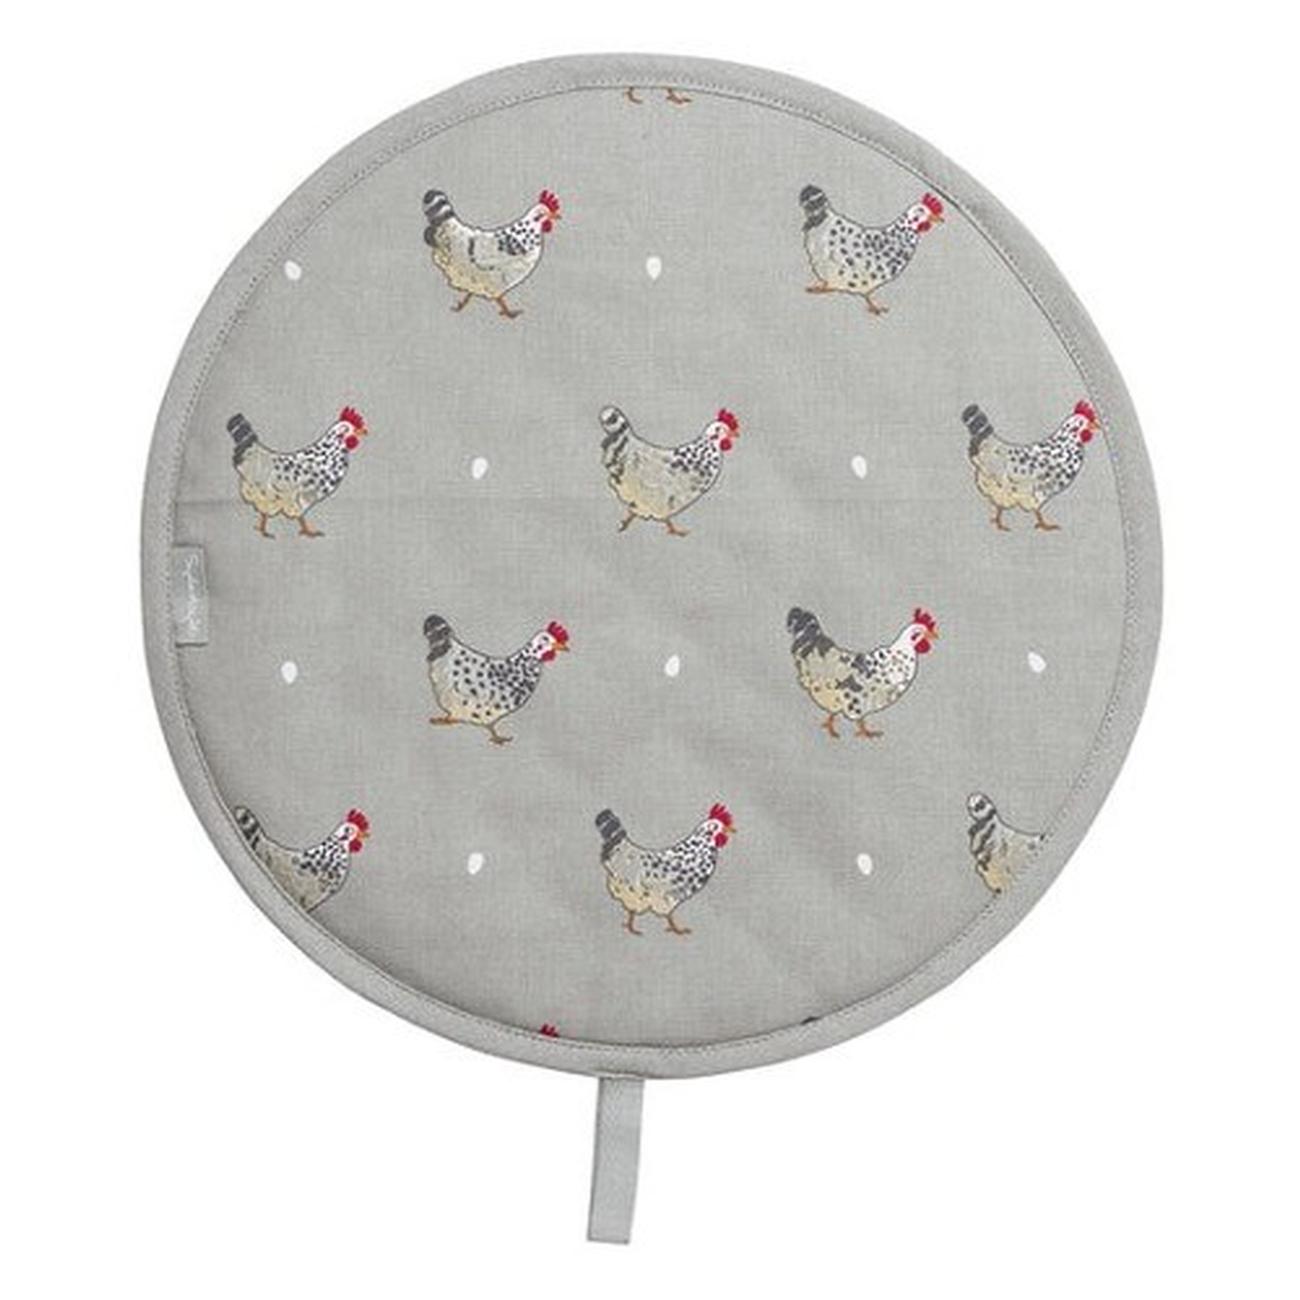 sap-chicken-circular-hob-cover - Sophie Allport Chicken Circular Hob Cover